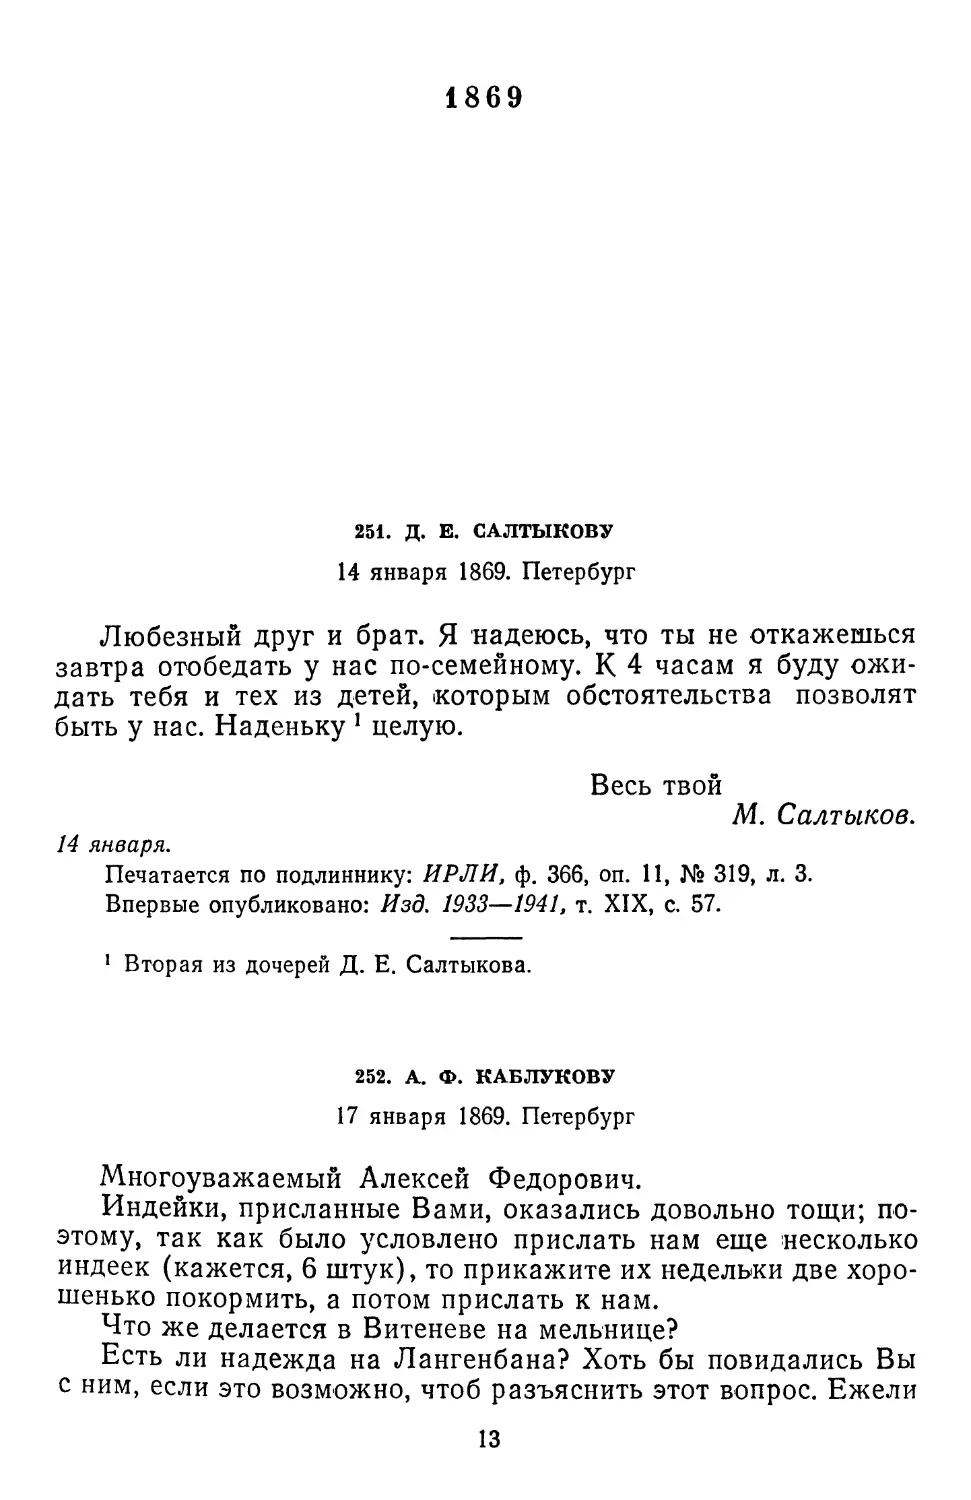 1869
252.А. Ф. Каблукову. 17 января 1869. Петербург ...